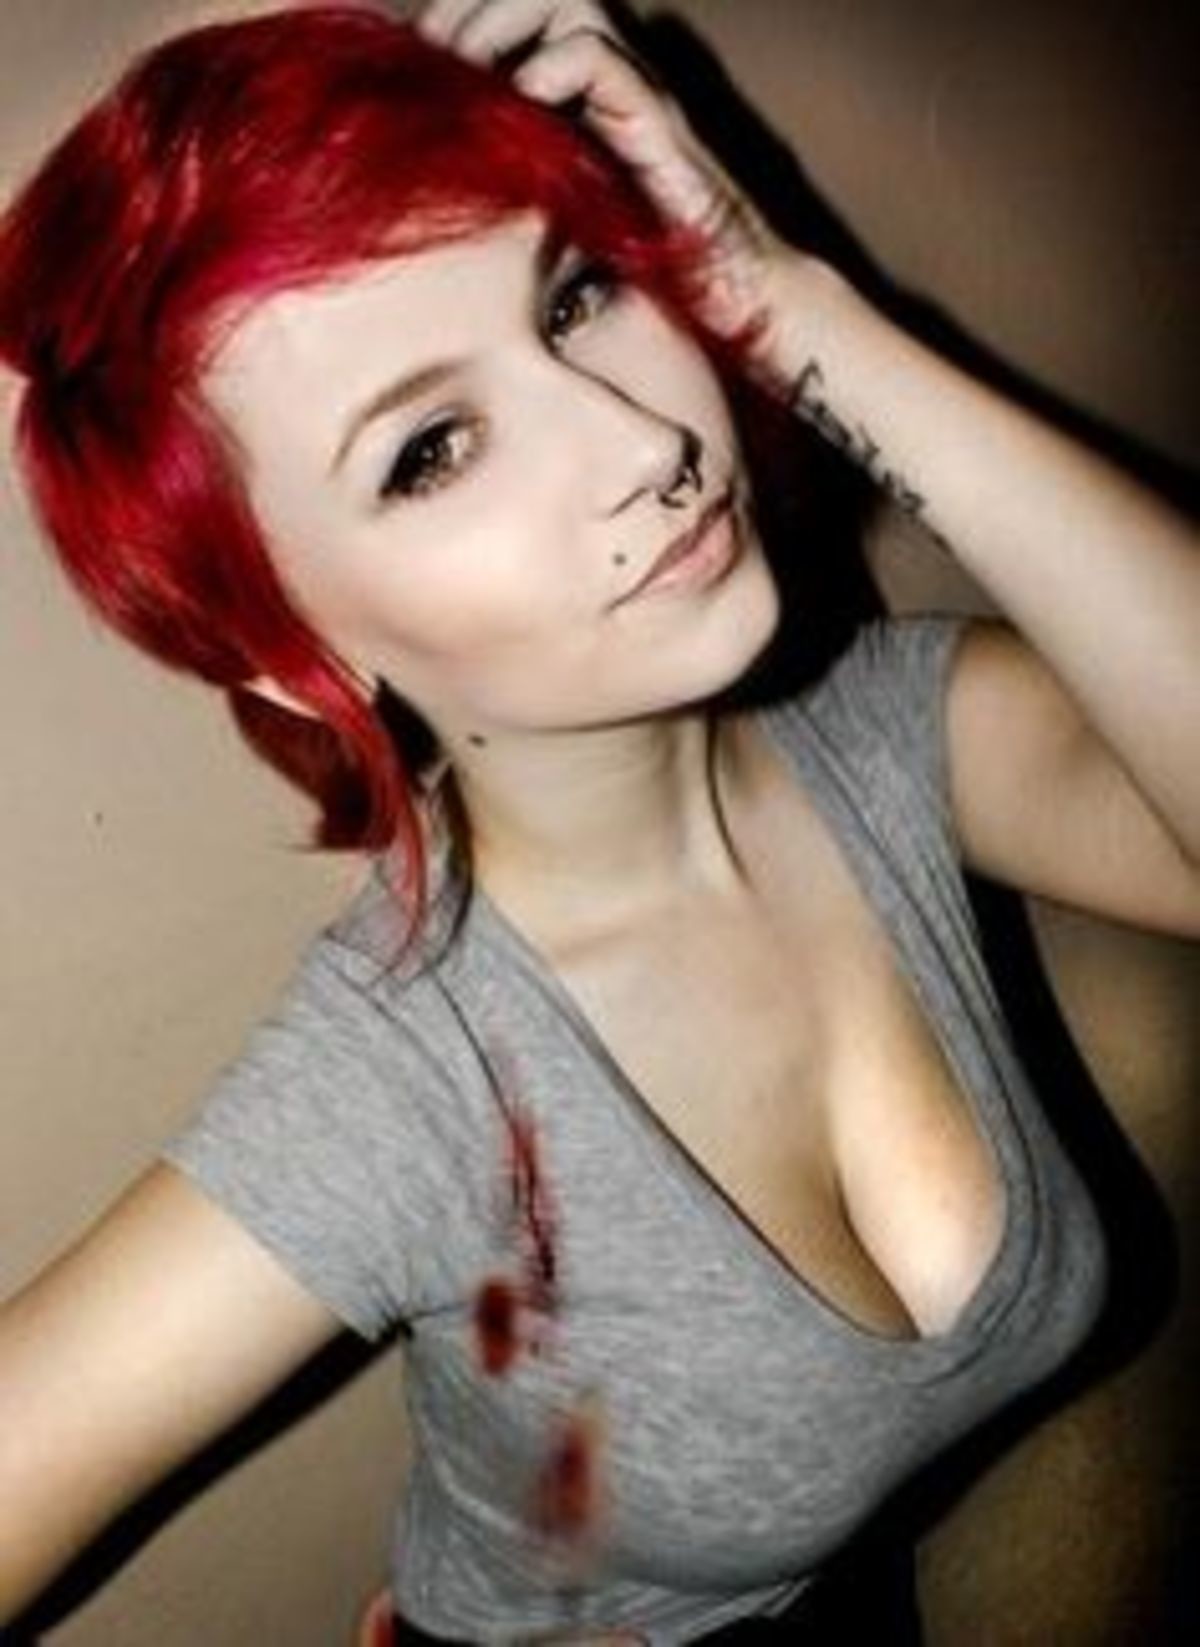 Hot redhead get her pierced fan photos